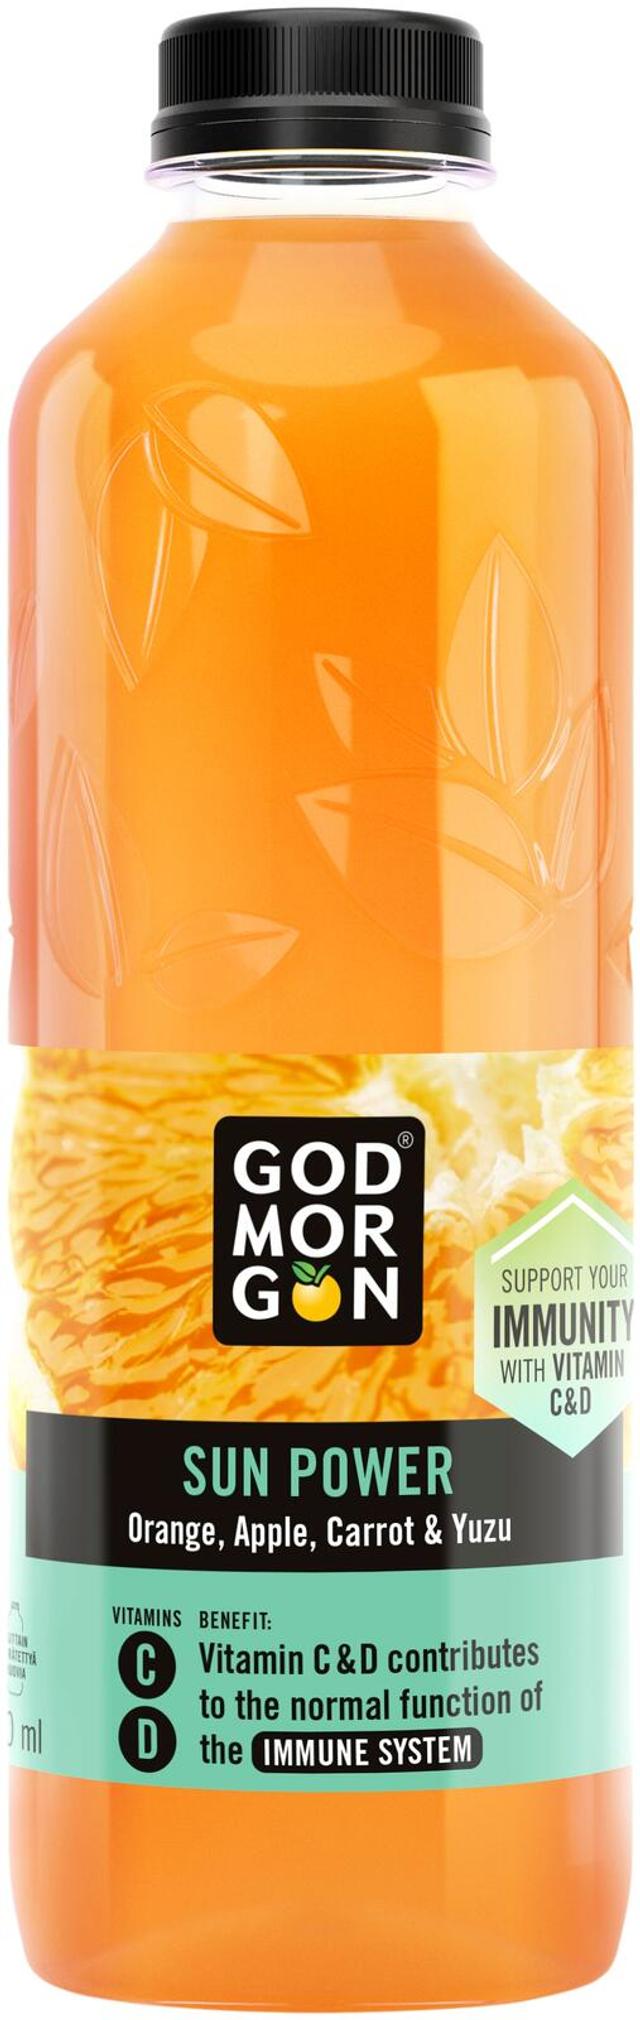 God Morgon Sun Power täysmehu C&D-vitamiinit 850 ml